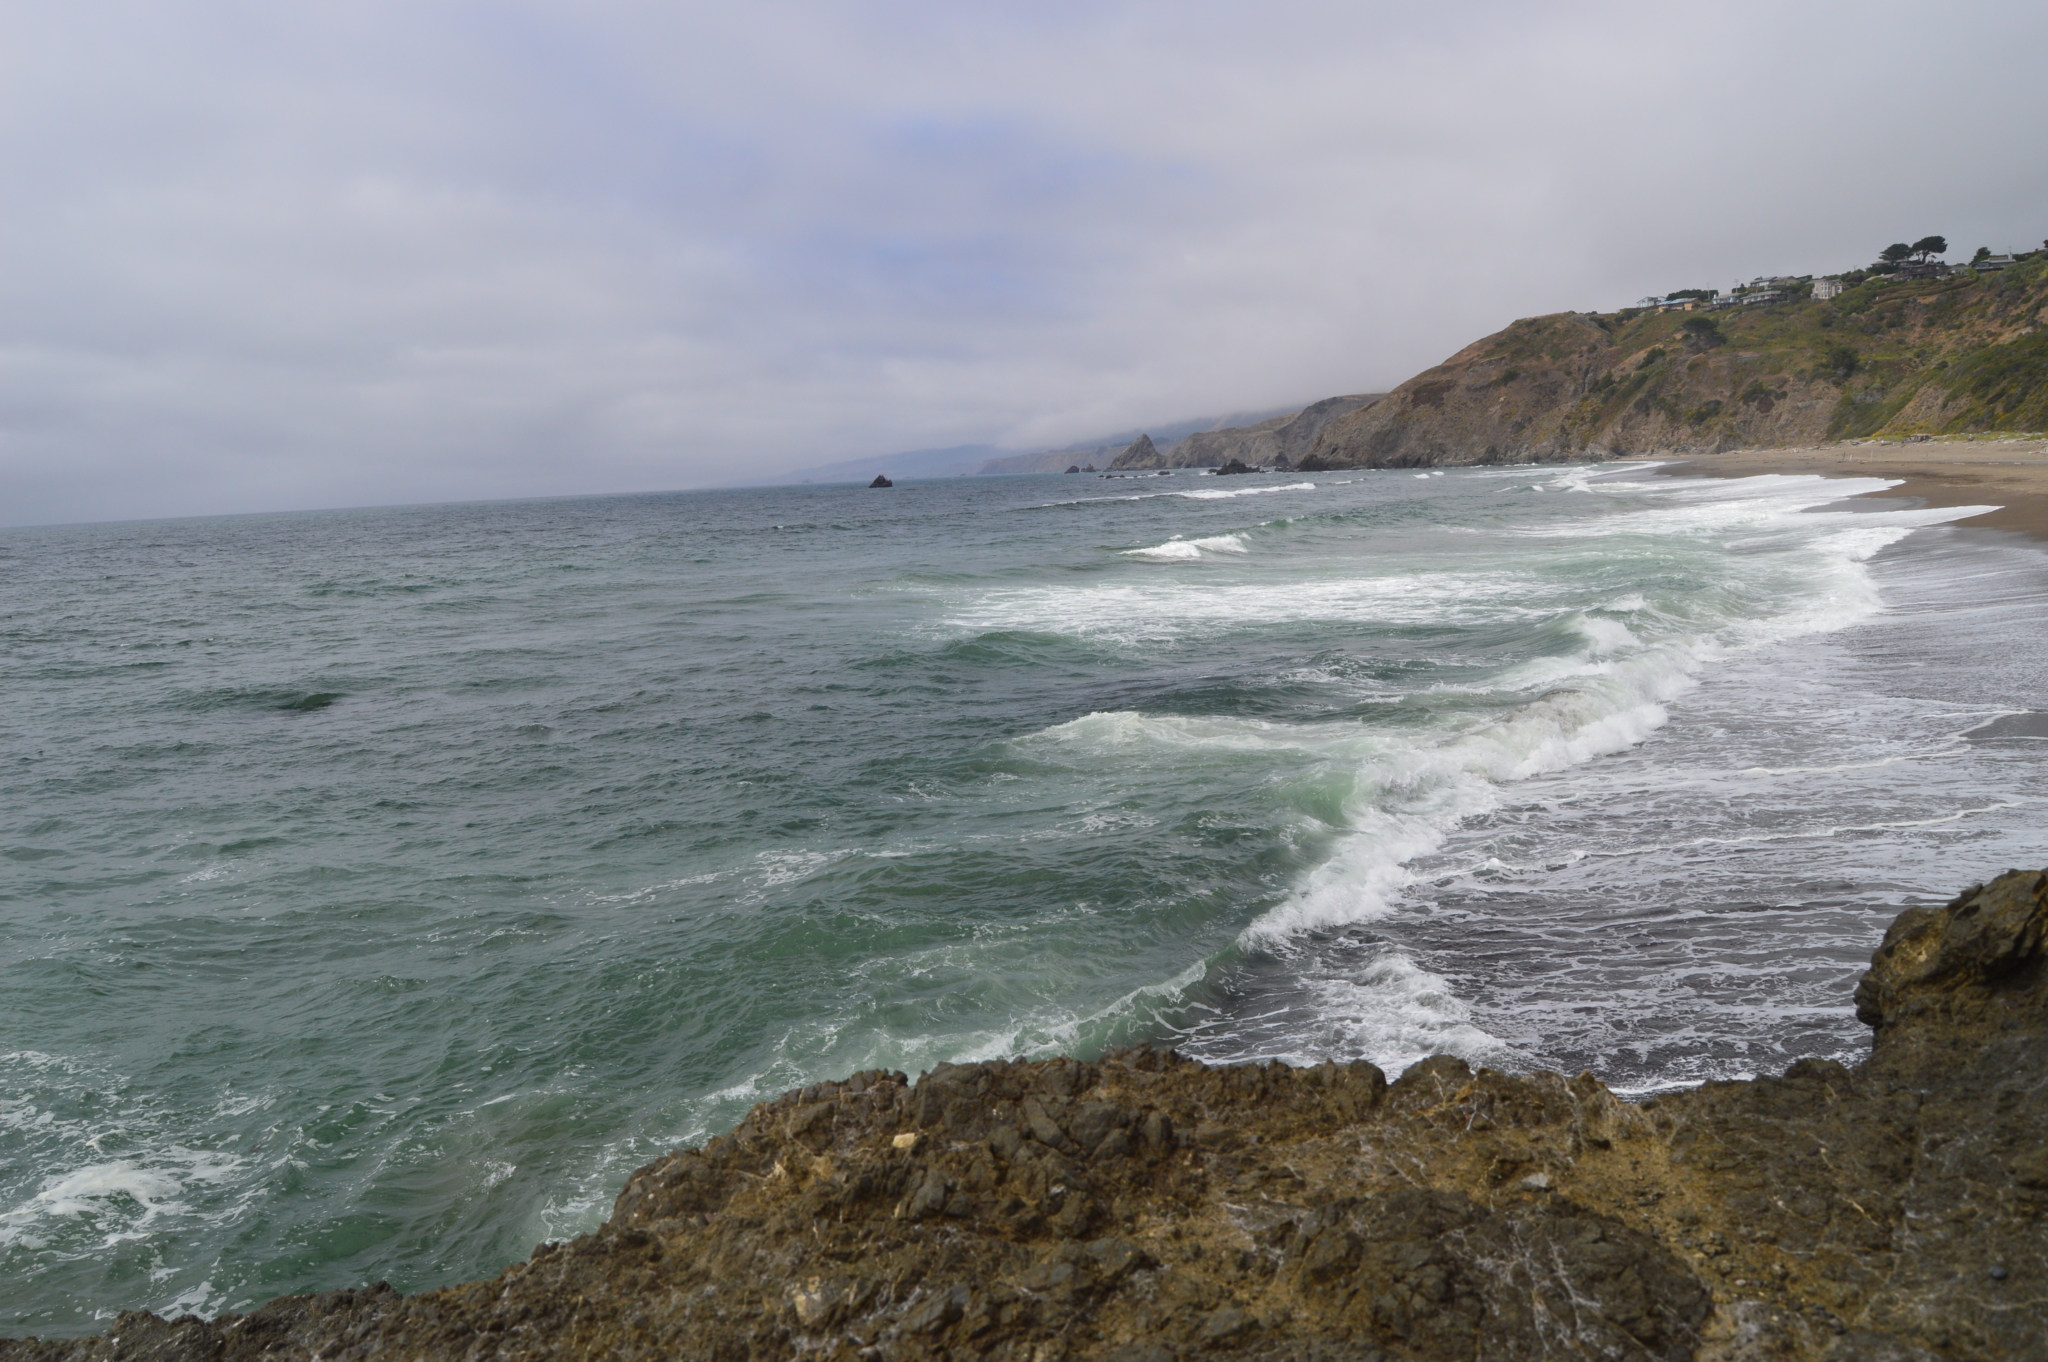 Ocean waves rolling into rocky coastline of Northern California